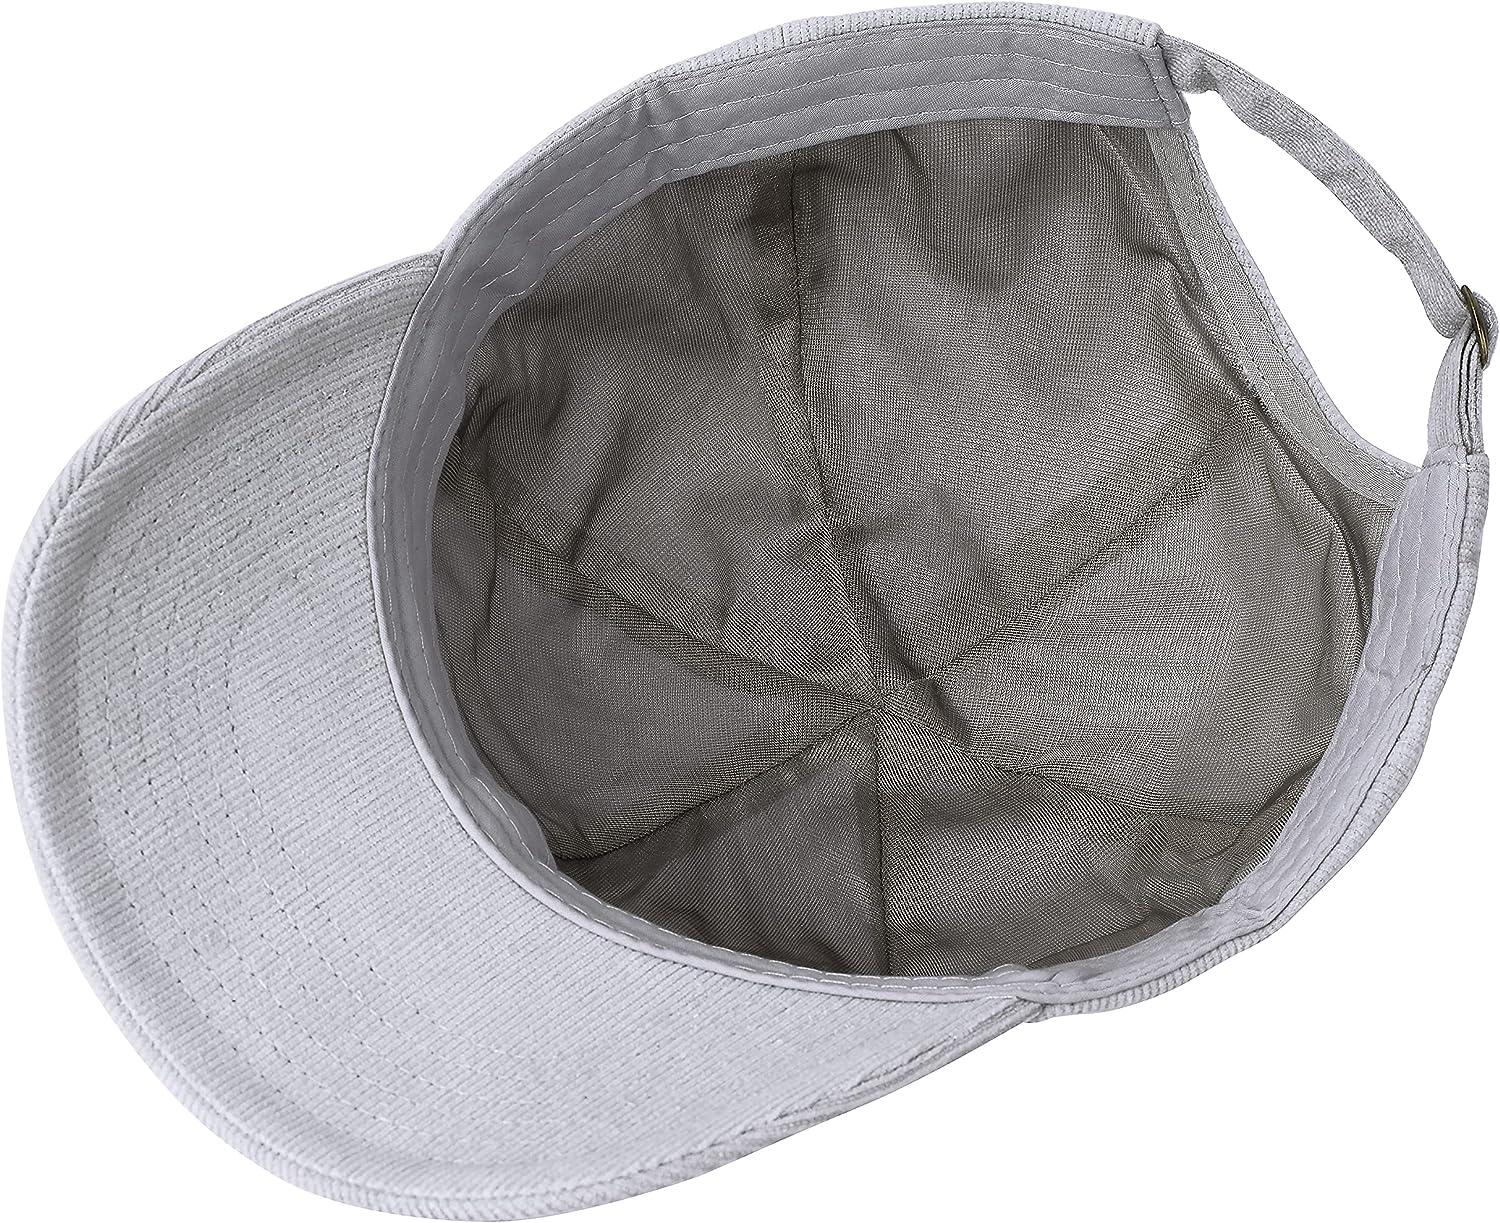 DefenderShield Silver-Lined Faraday Cap EMF Hat